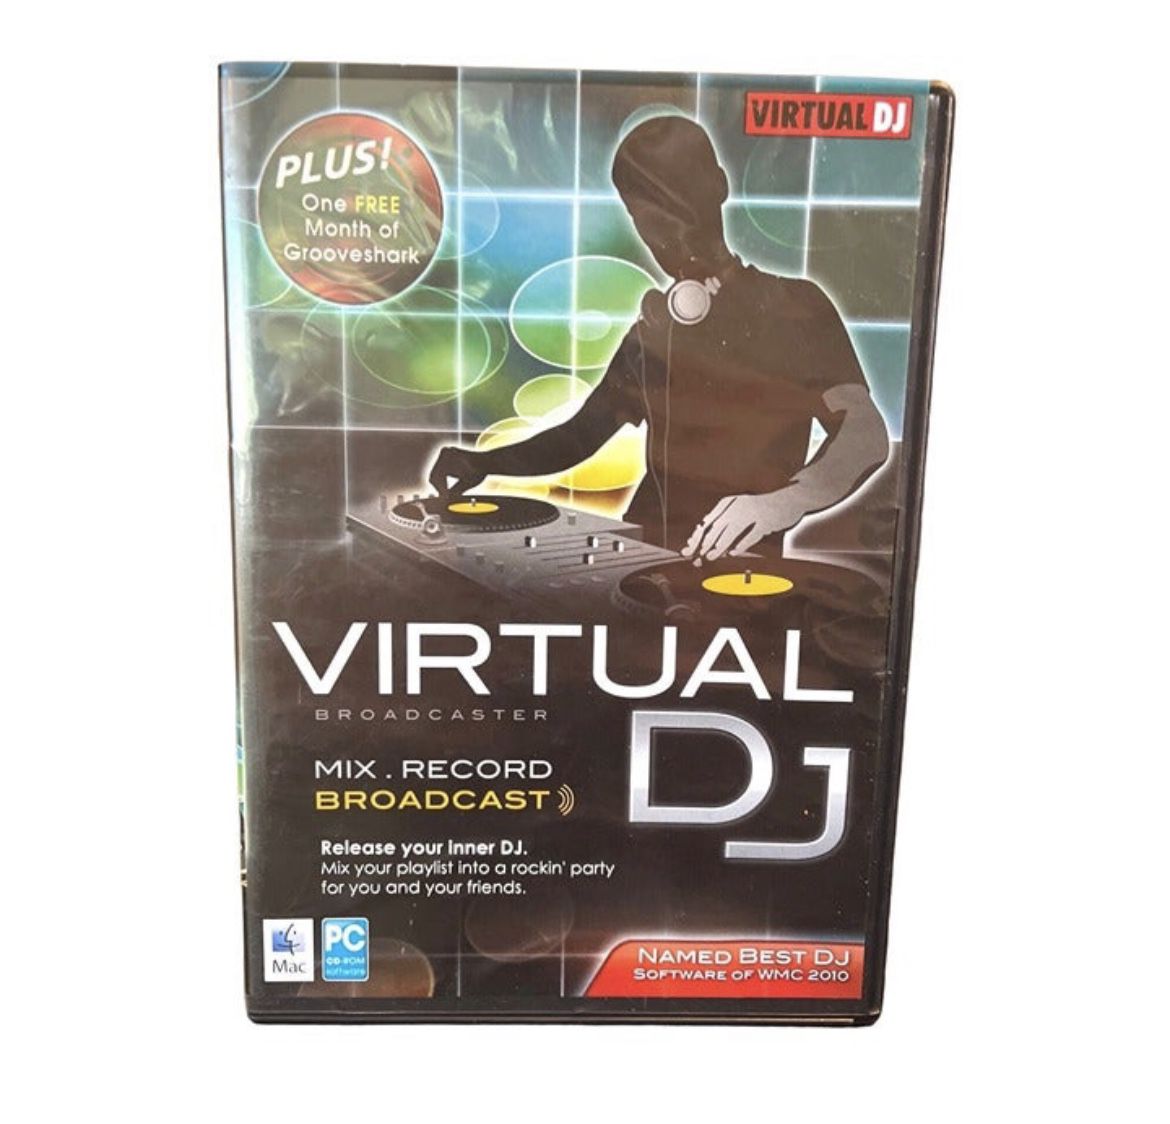 Virtual DJ Broadcast PC & Mac Encore Mix Record Broadcast 